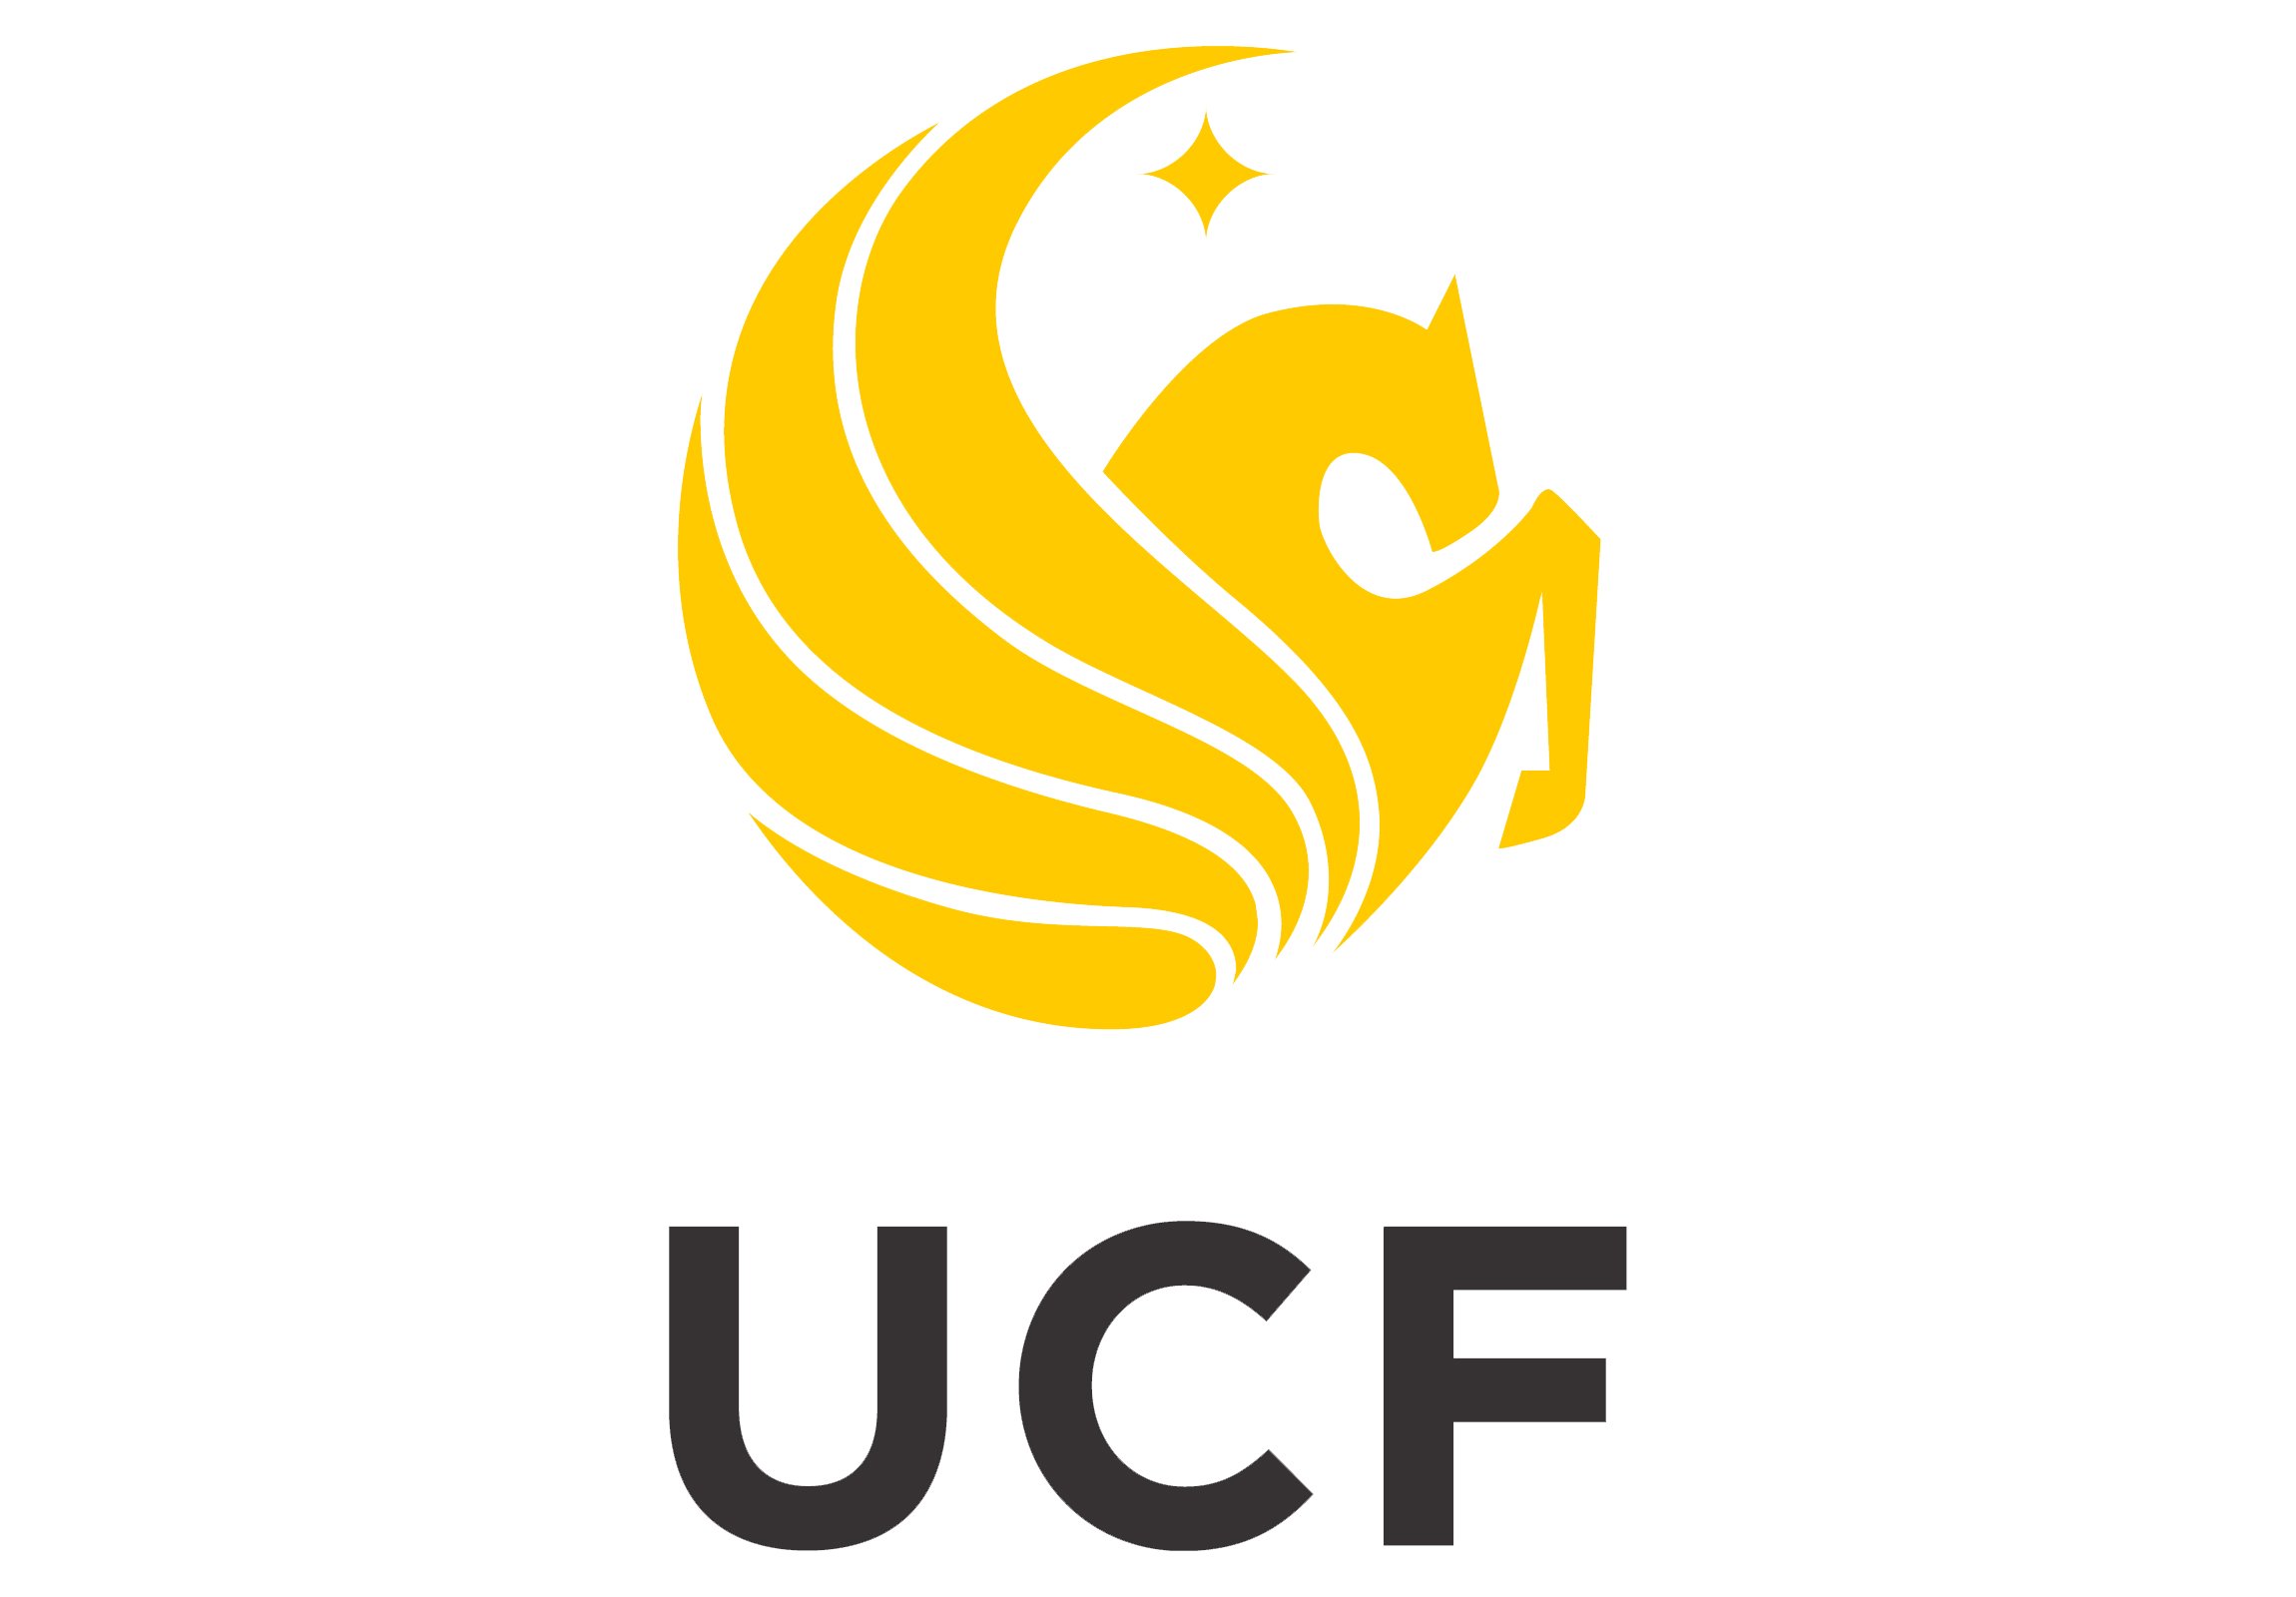 University of Central Florida's logo